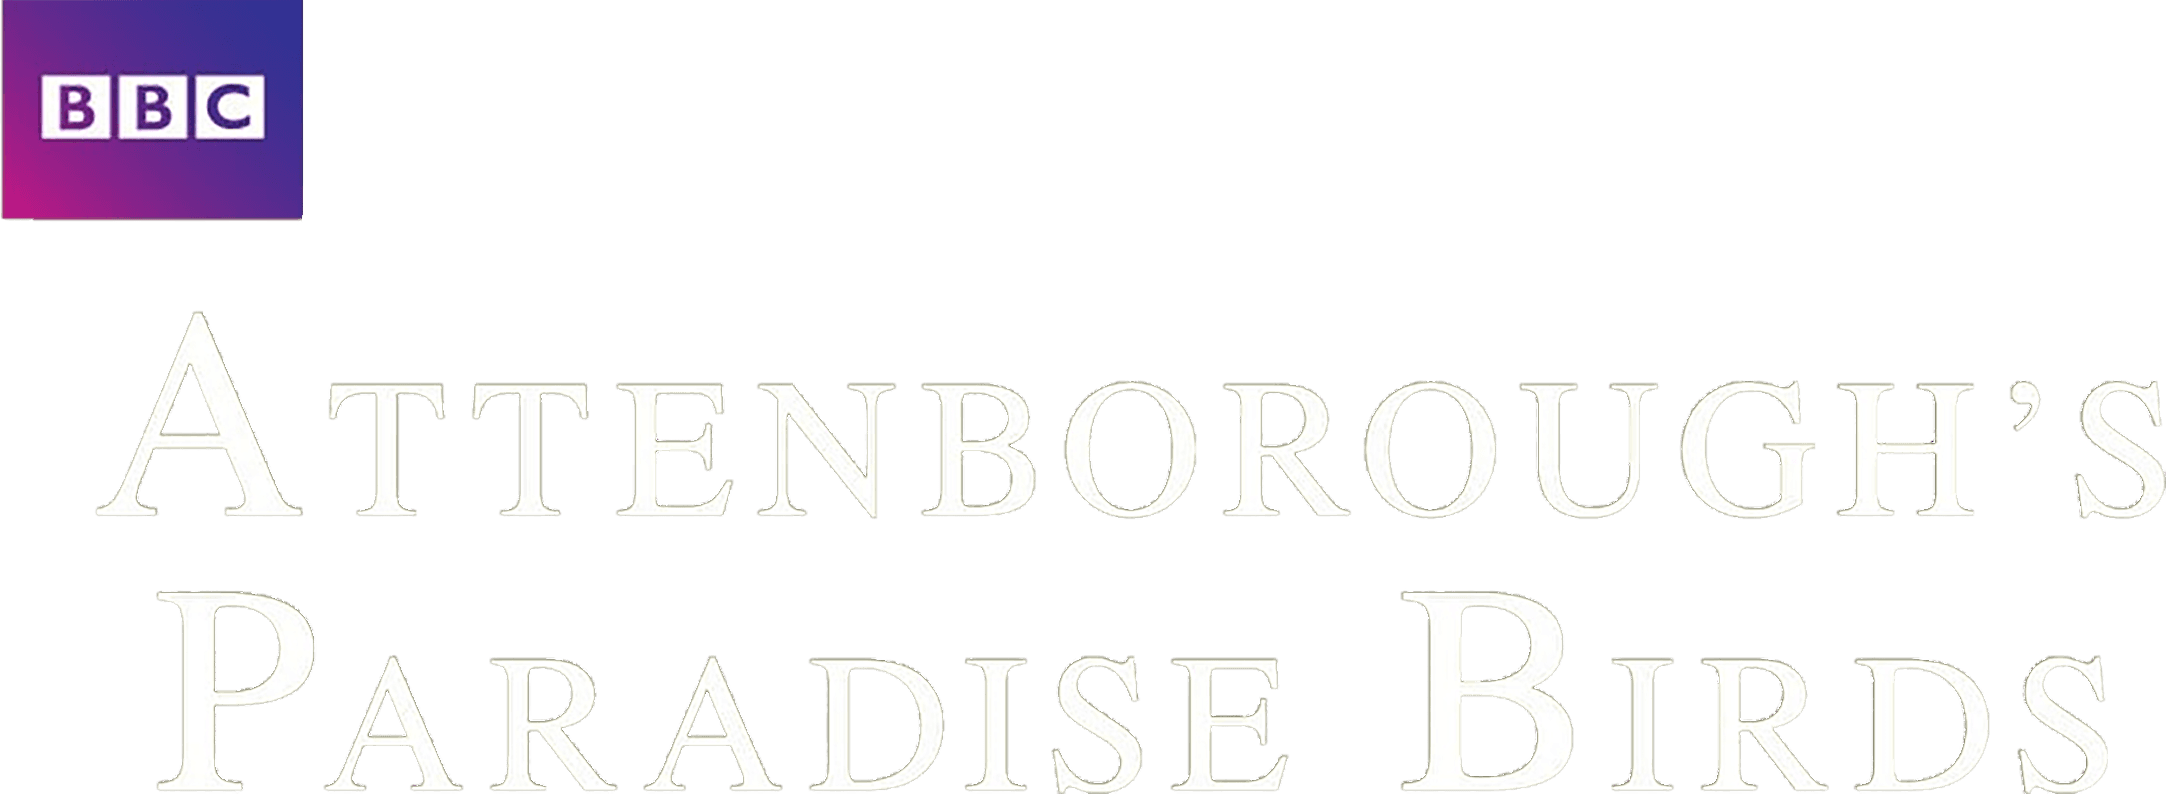 Attenborough's Paradise Birds logo